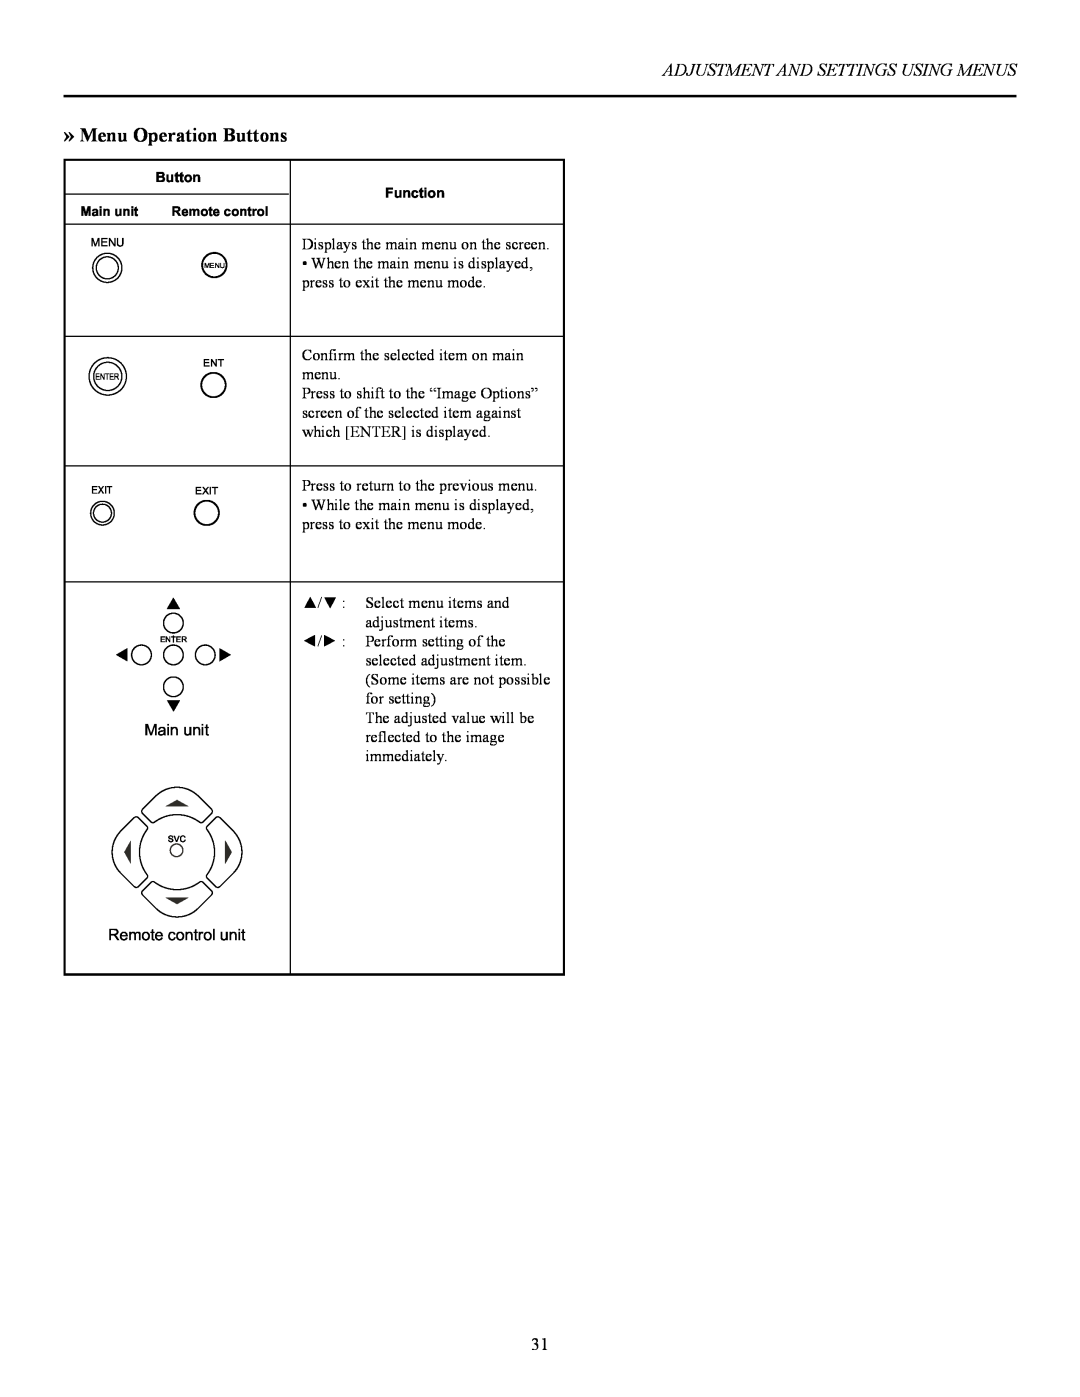 Vidikron 60 manual » Menu Operation Buttons, Adjustment And Settings Using Menus 